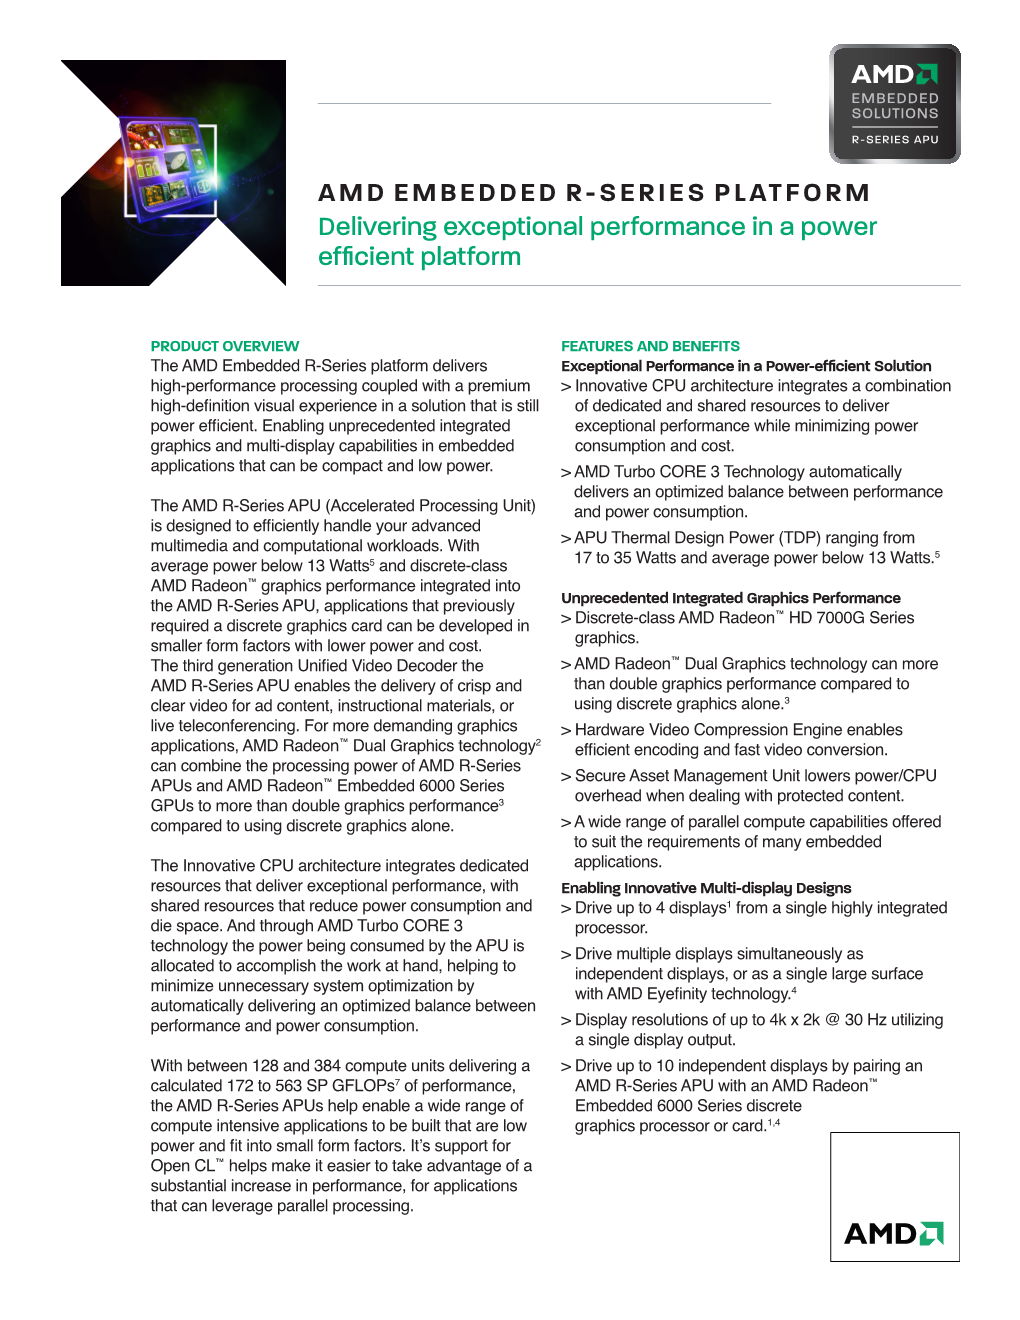 AMD EMBEDDED R-SERIES PLATFORM Delivering Exceptional Performance in a Power Efficient Platform